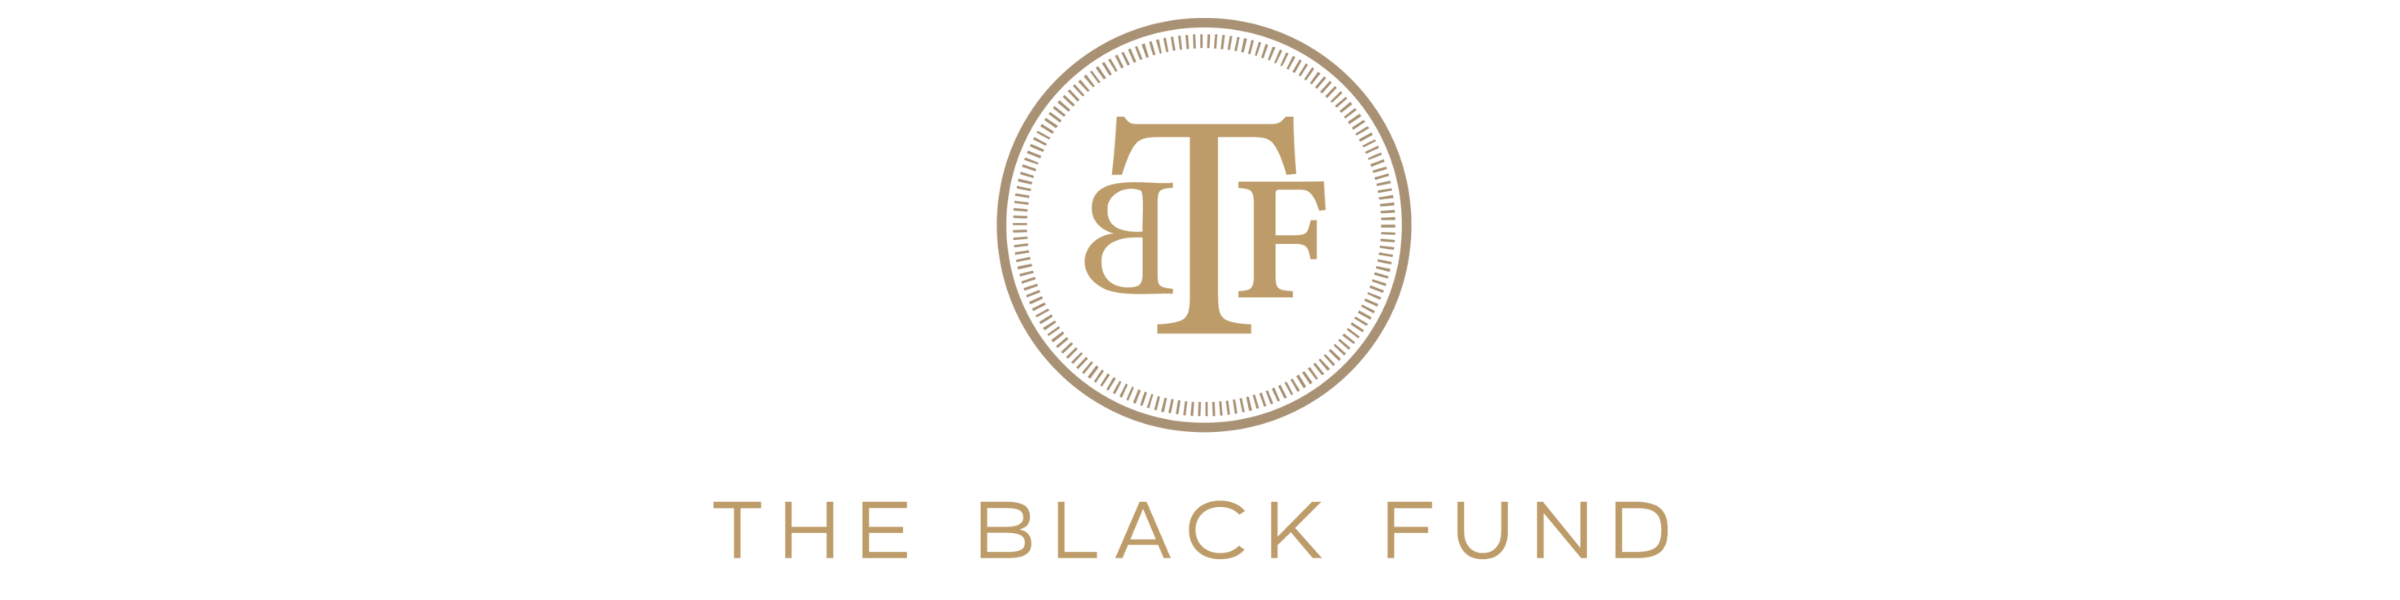 The Black Fund